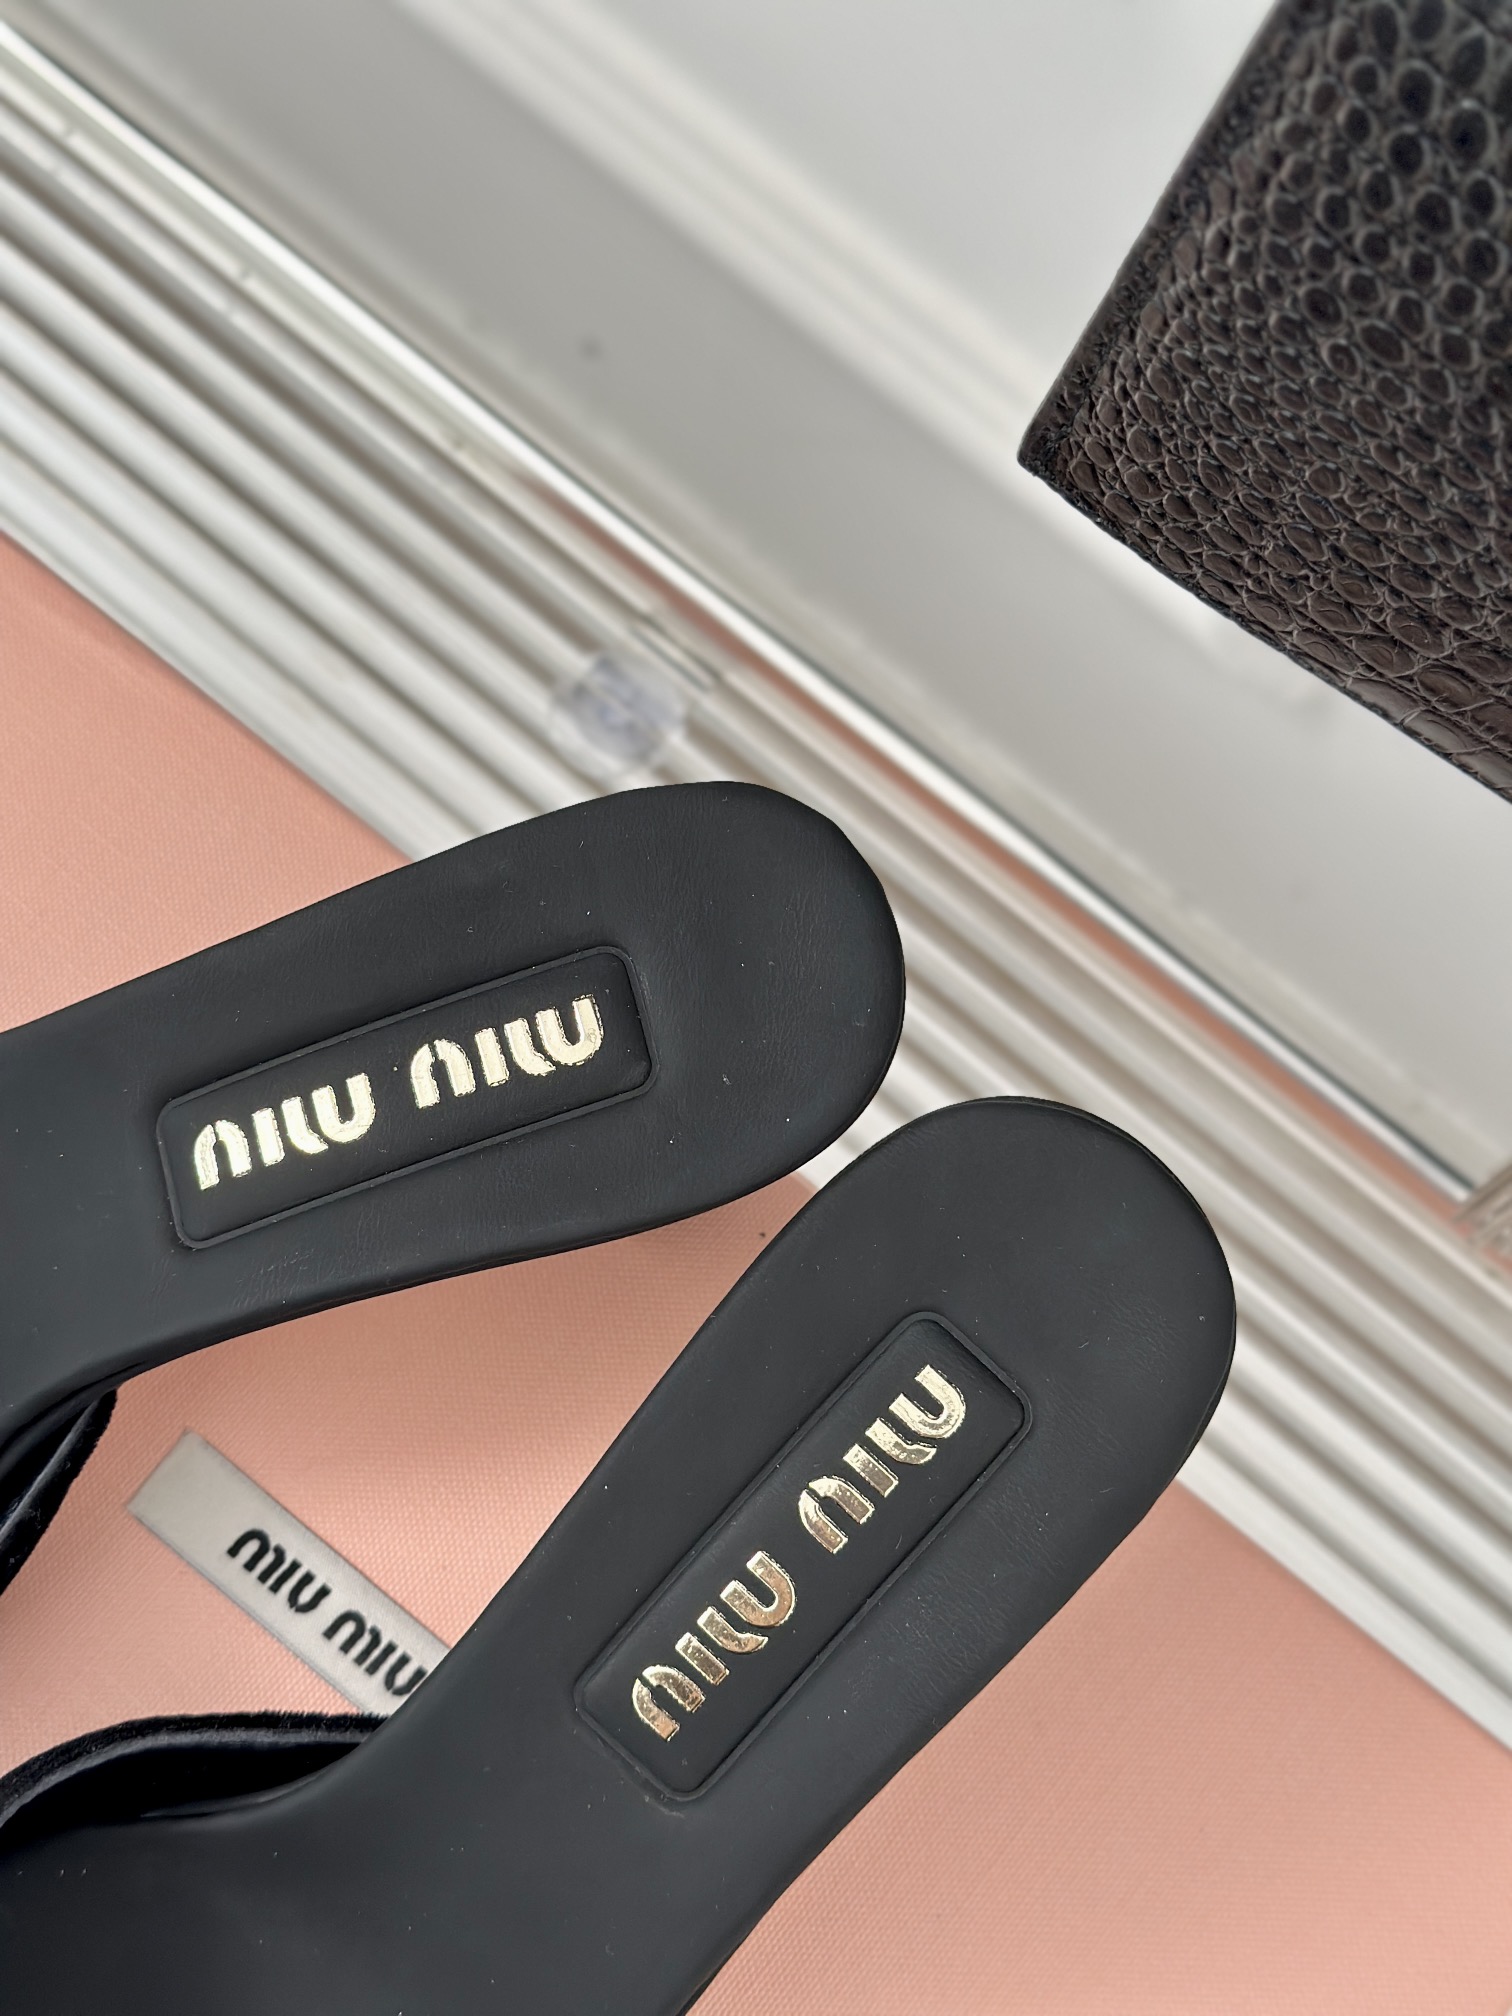 MIUMIU24新品经典蝴蝶结高跟拖鞋鞋面采用进口真丝/水钻内里垫脚均为羊皮意大利进口牛皮大底跟高7.5